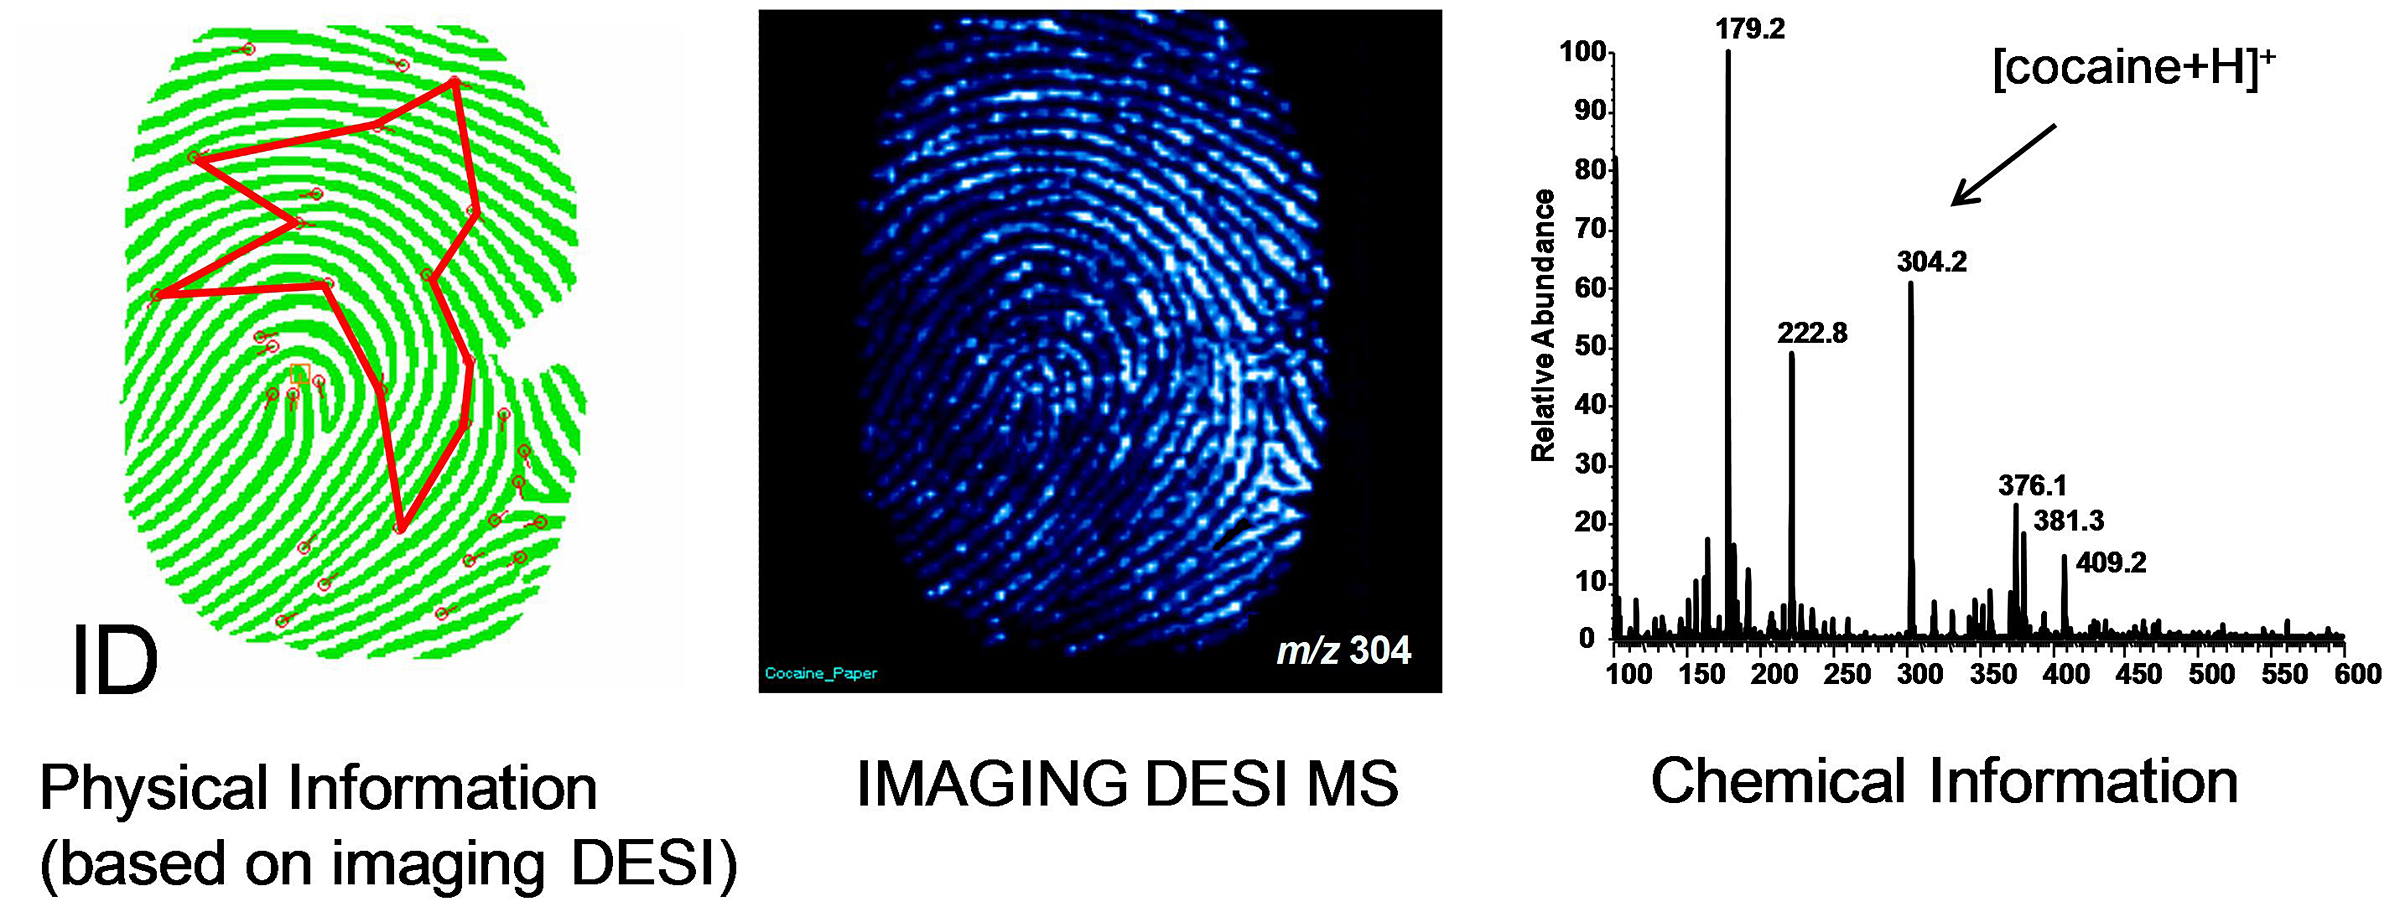 http://news.uns.purdue.edu/images/+2008/cooks-fingerprint.jpg